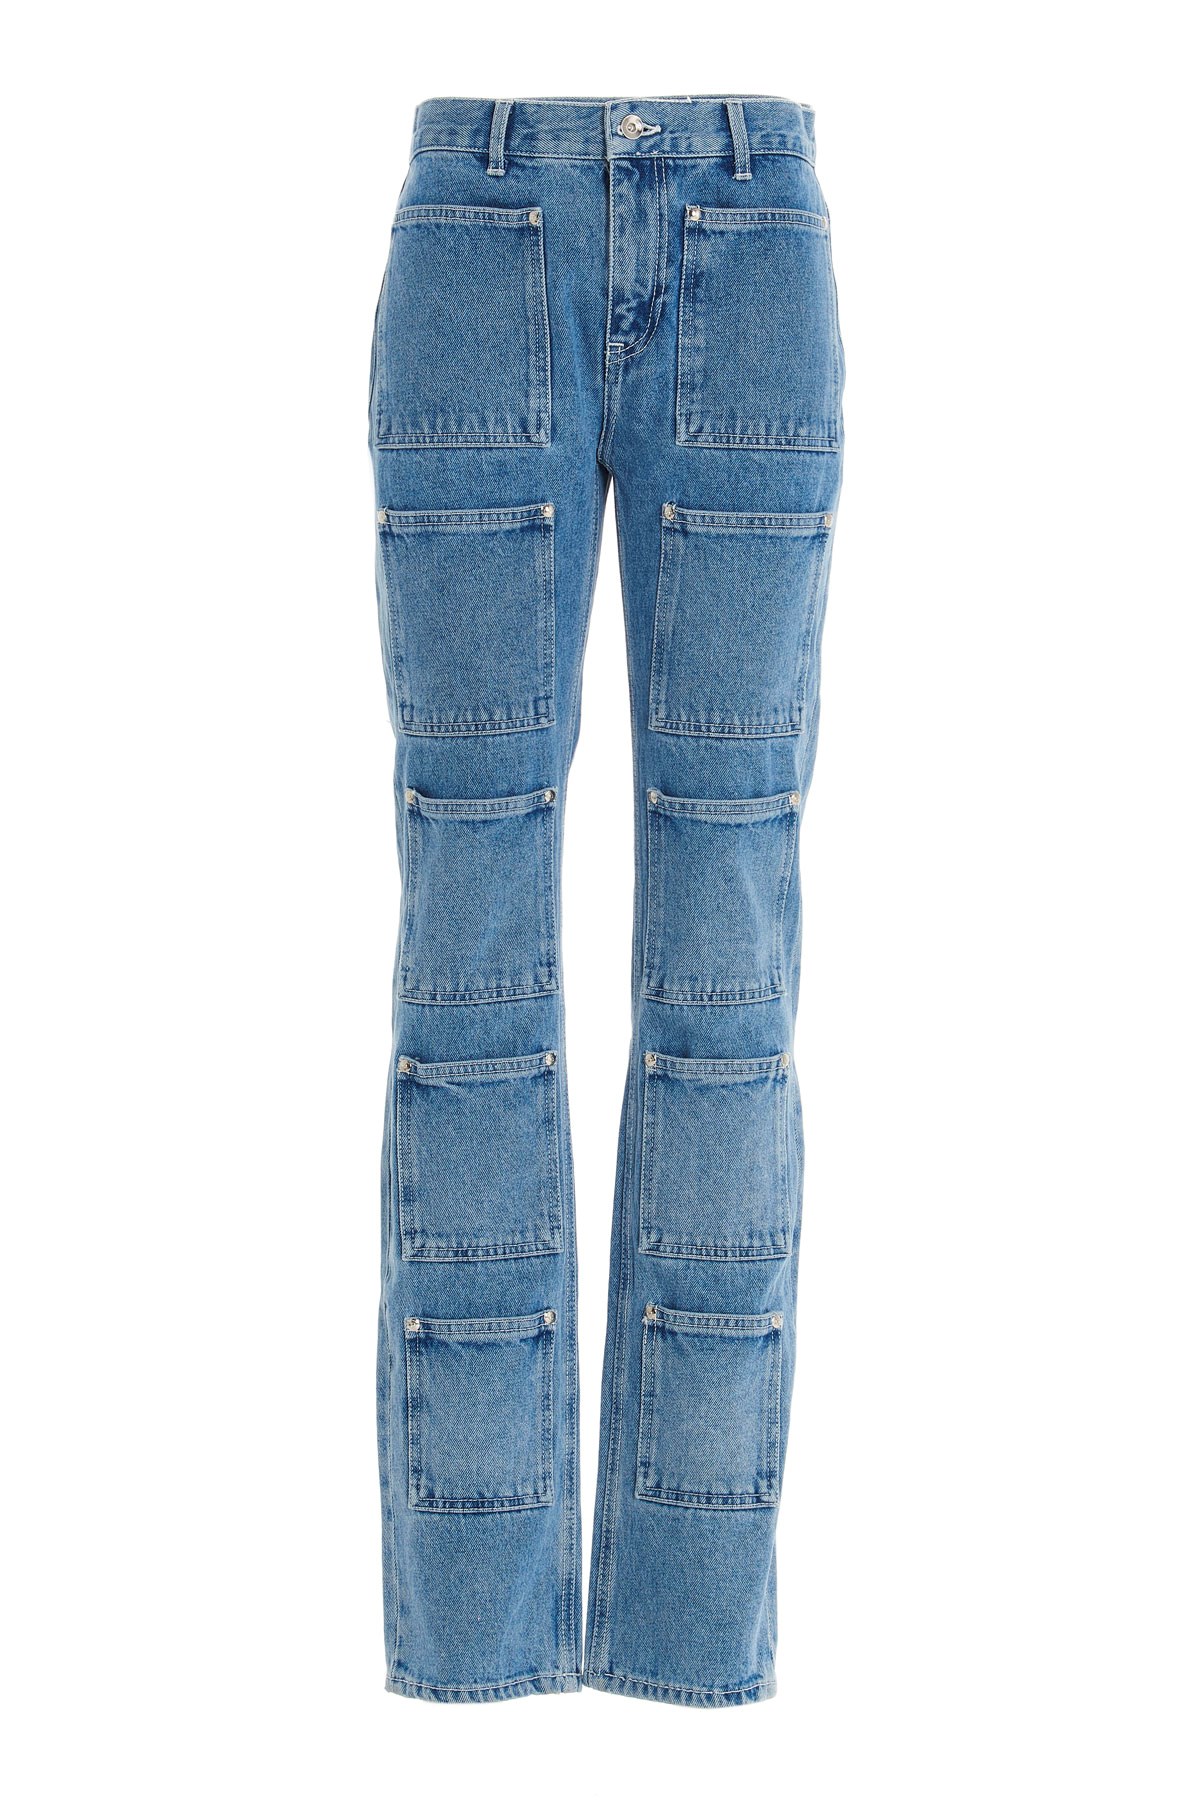 LOURDES NEW YORK Multi Pocket Jeans